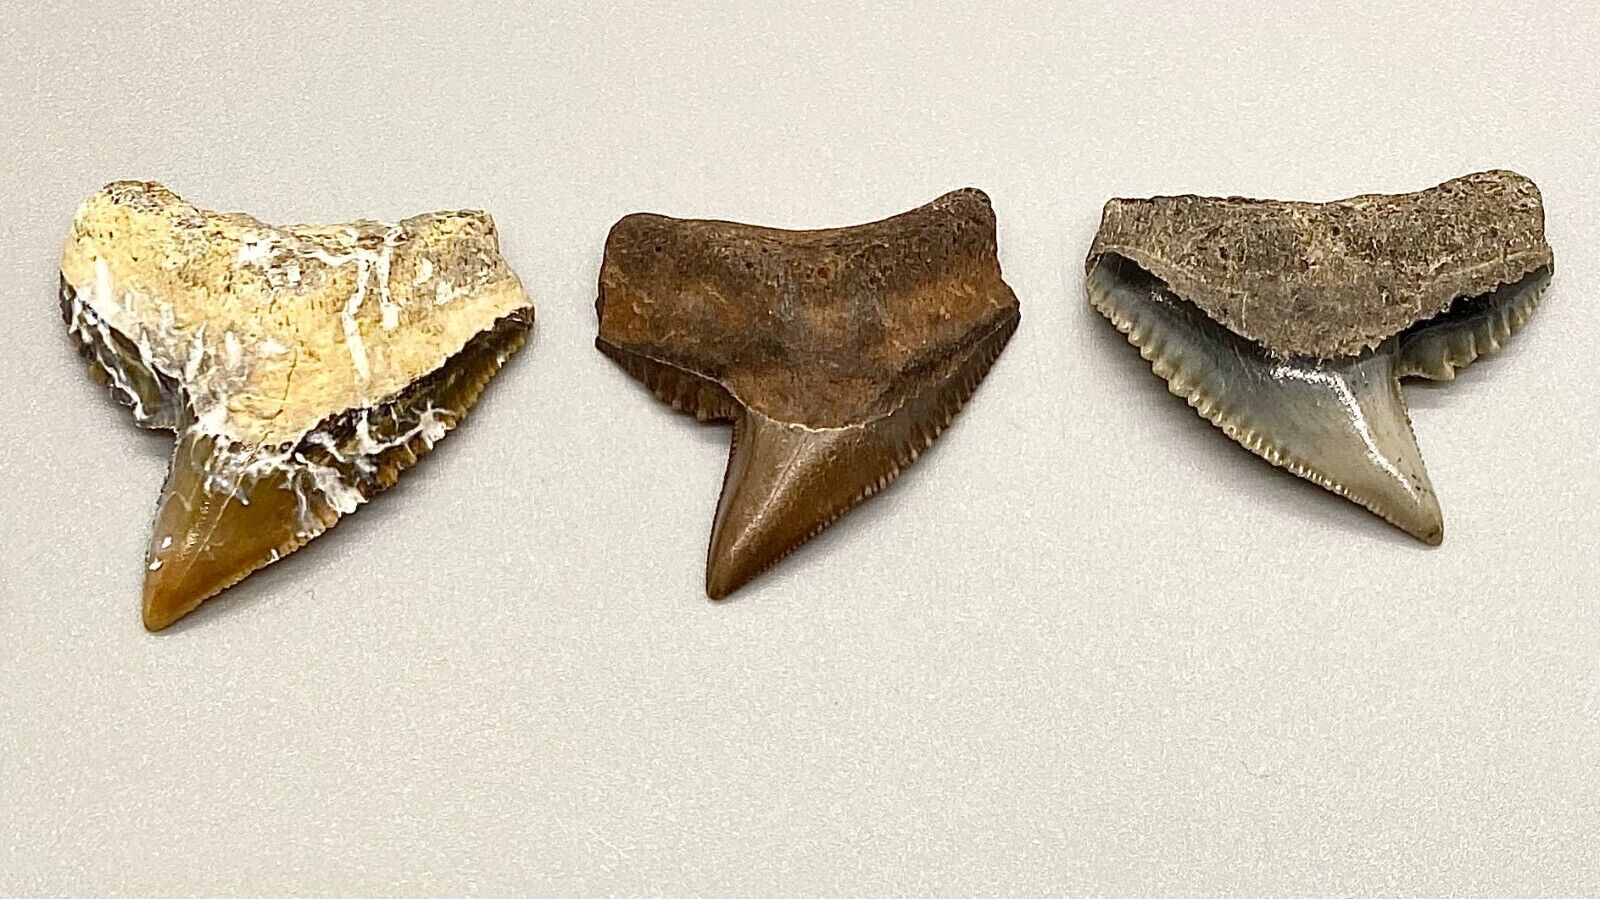 Group of 3 Very Nice And Colorful Fossil TIGER SHARK Teeth - Florida, USA